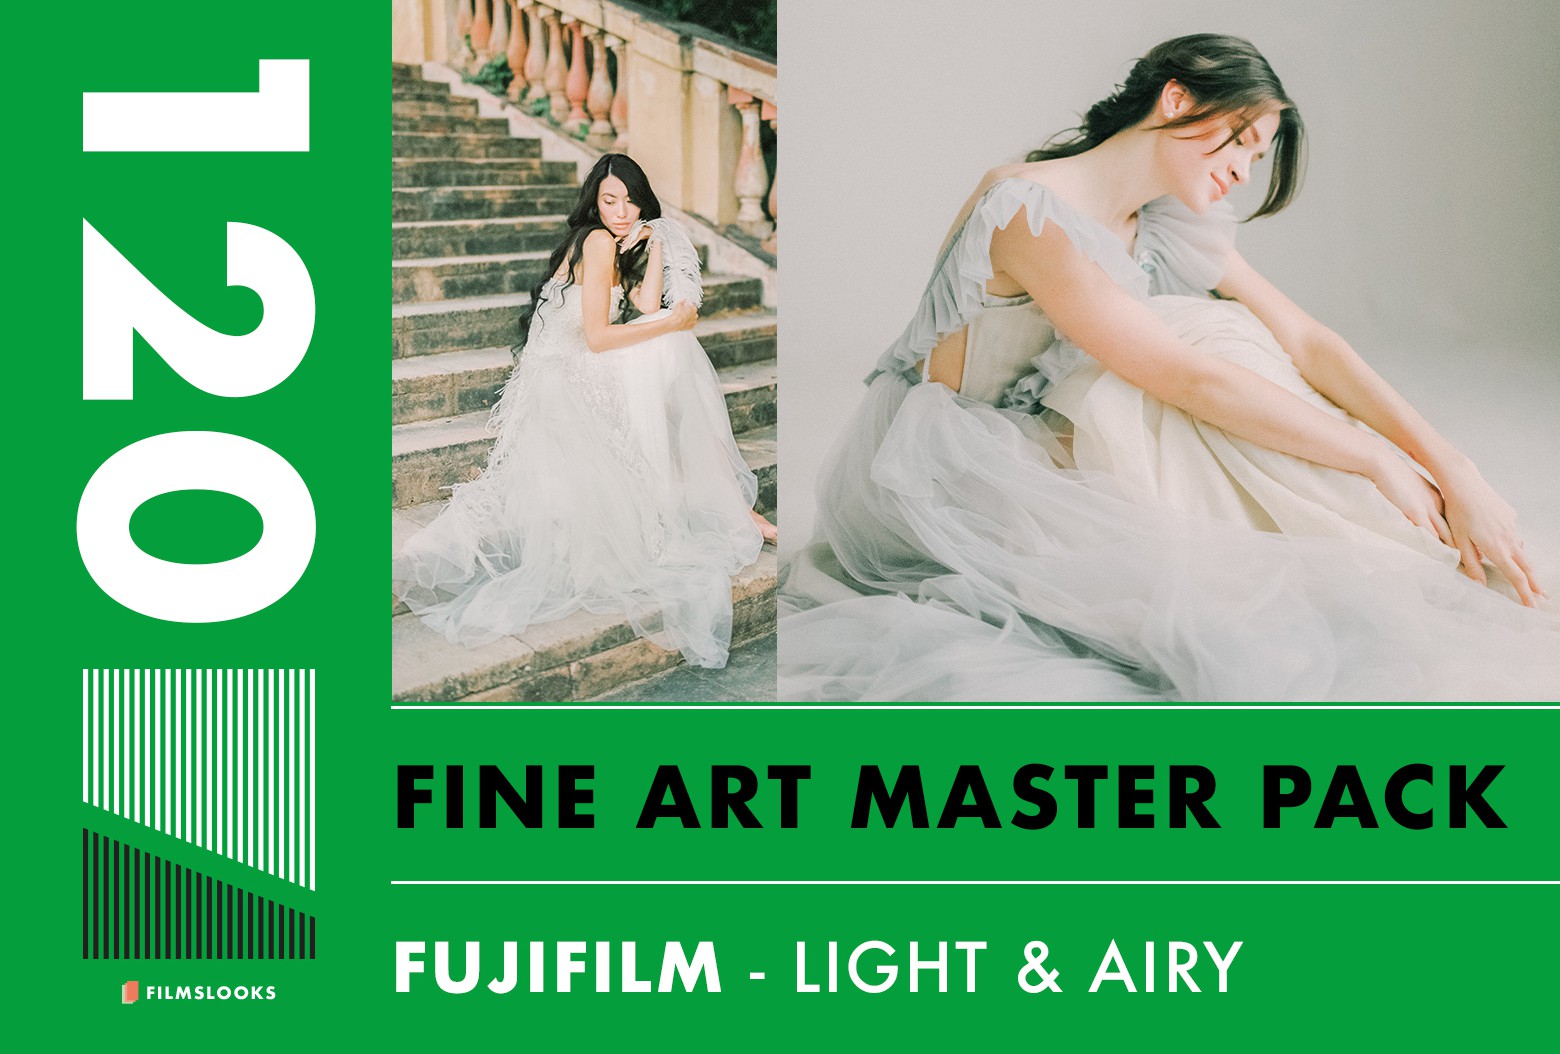 Fujifilm Master Pack.jpg